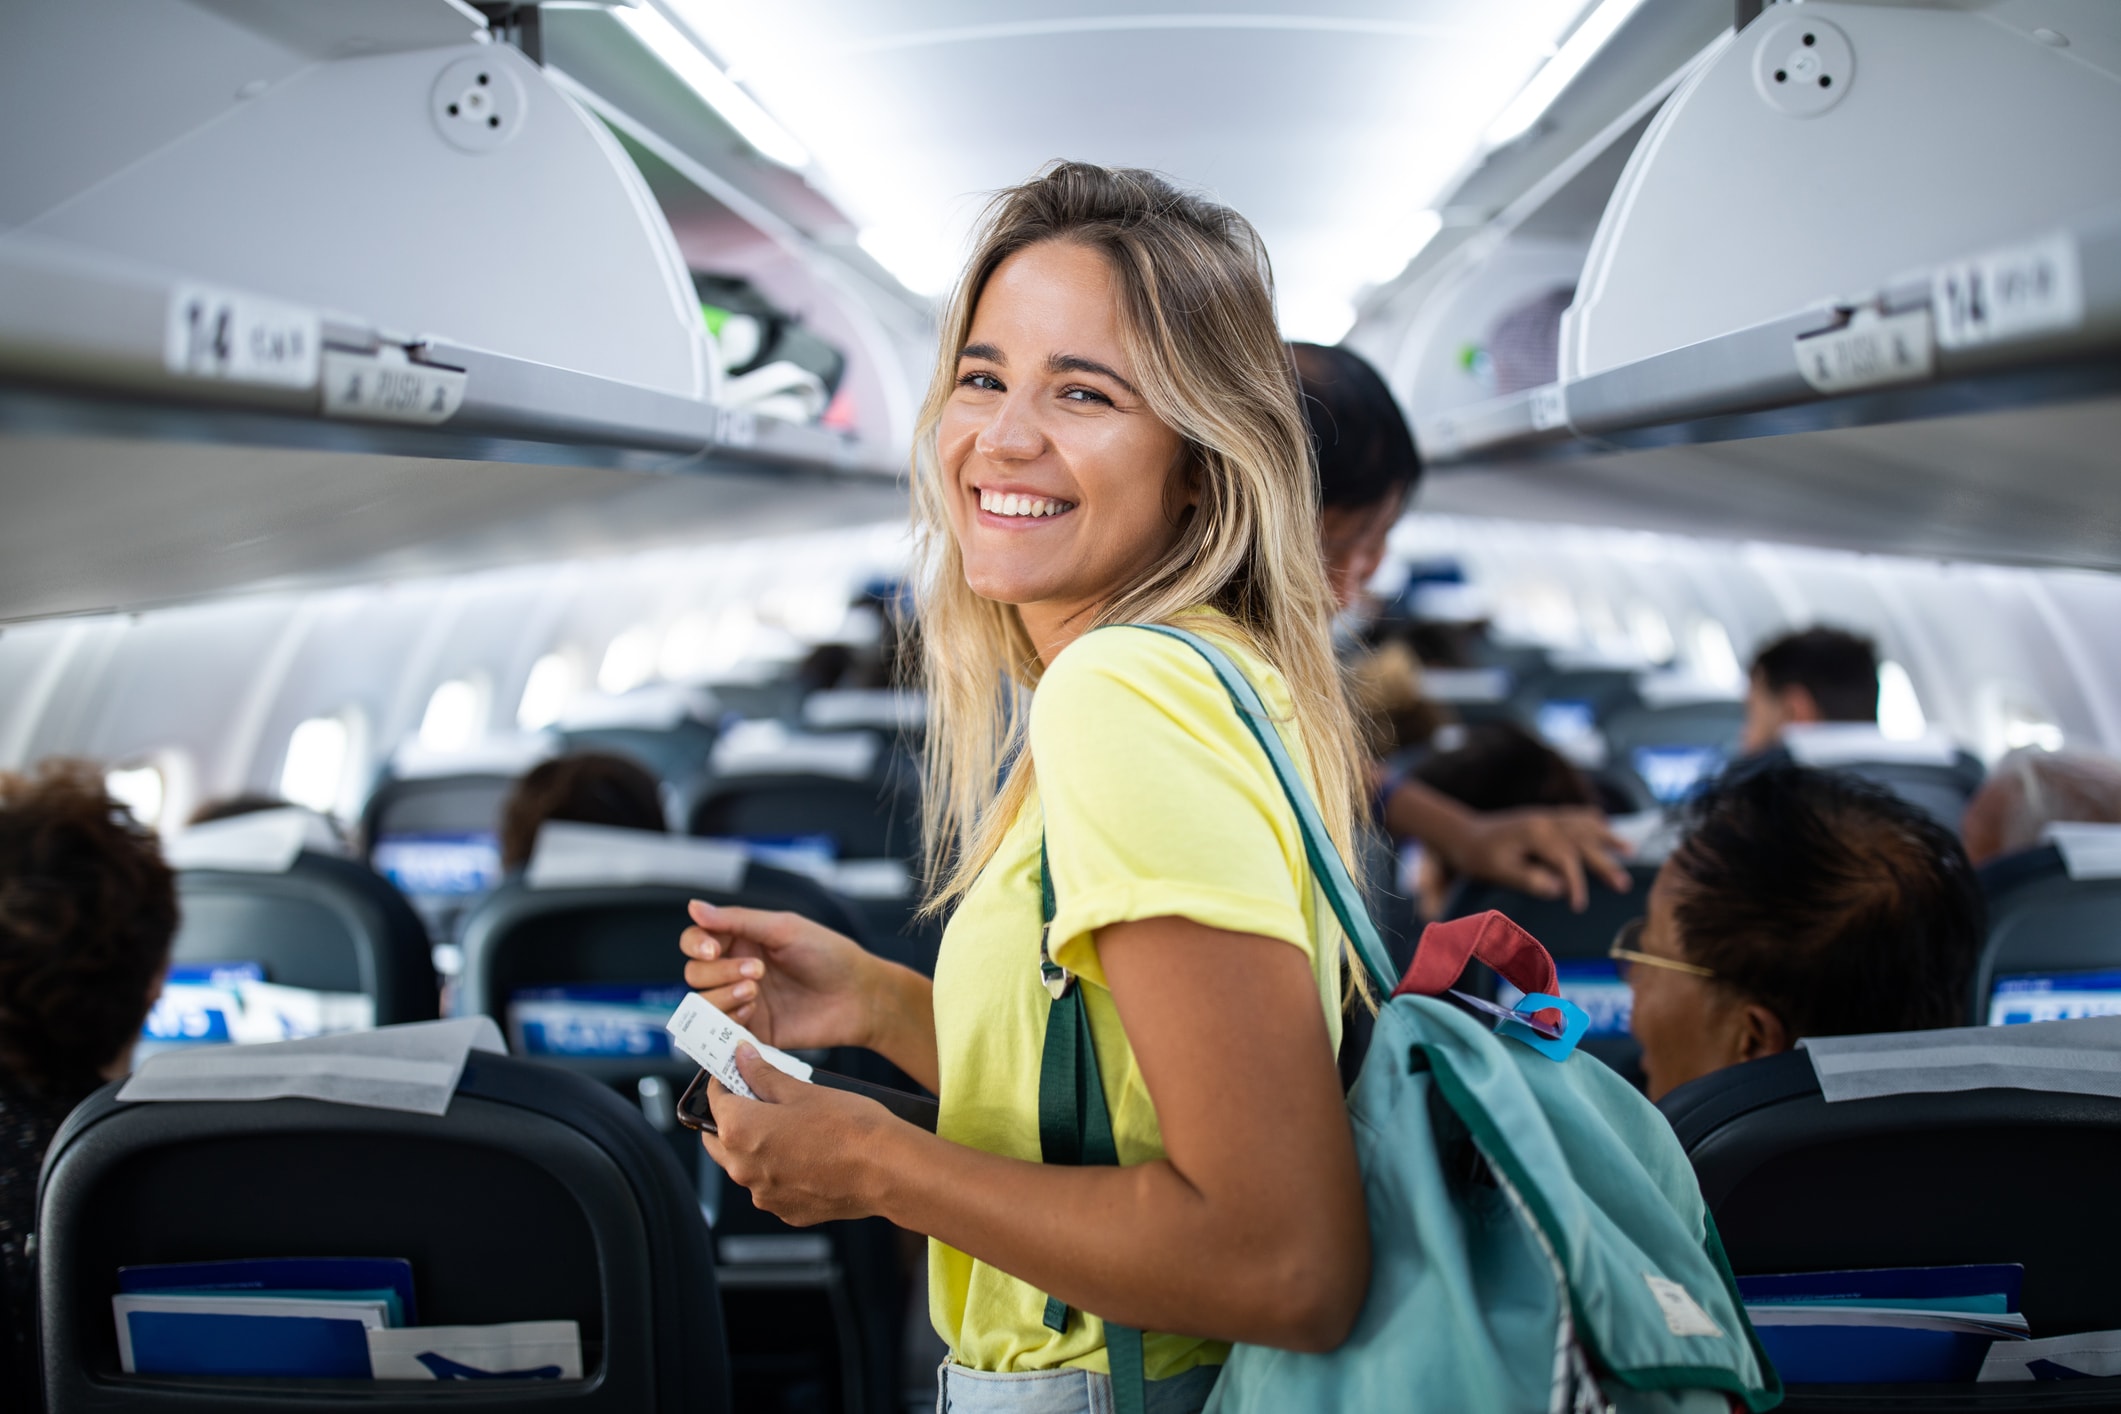 Woman boarding airplane